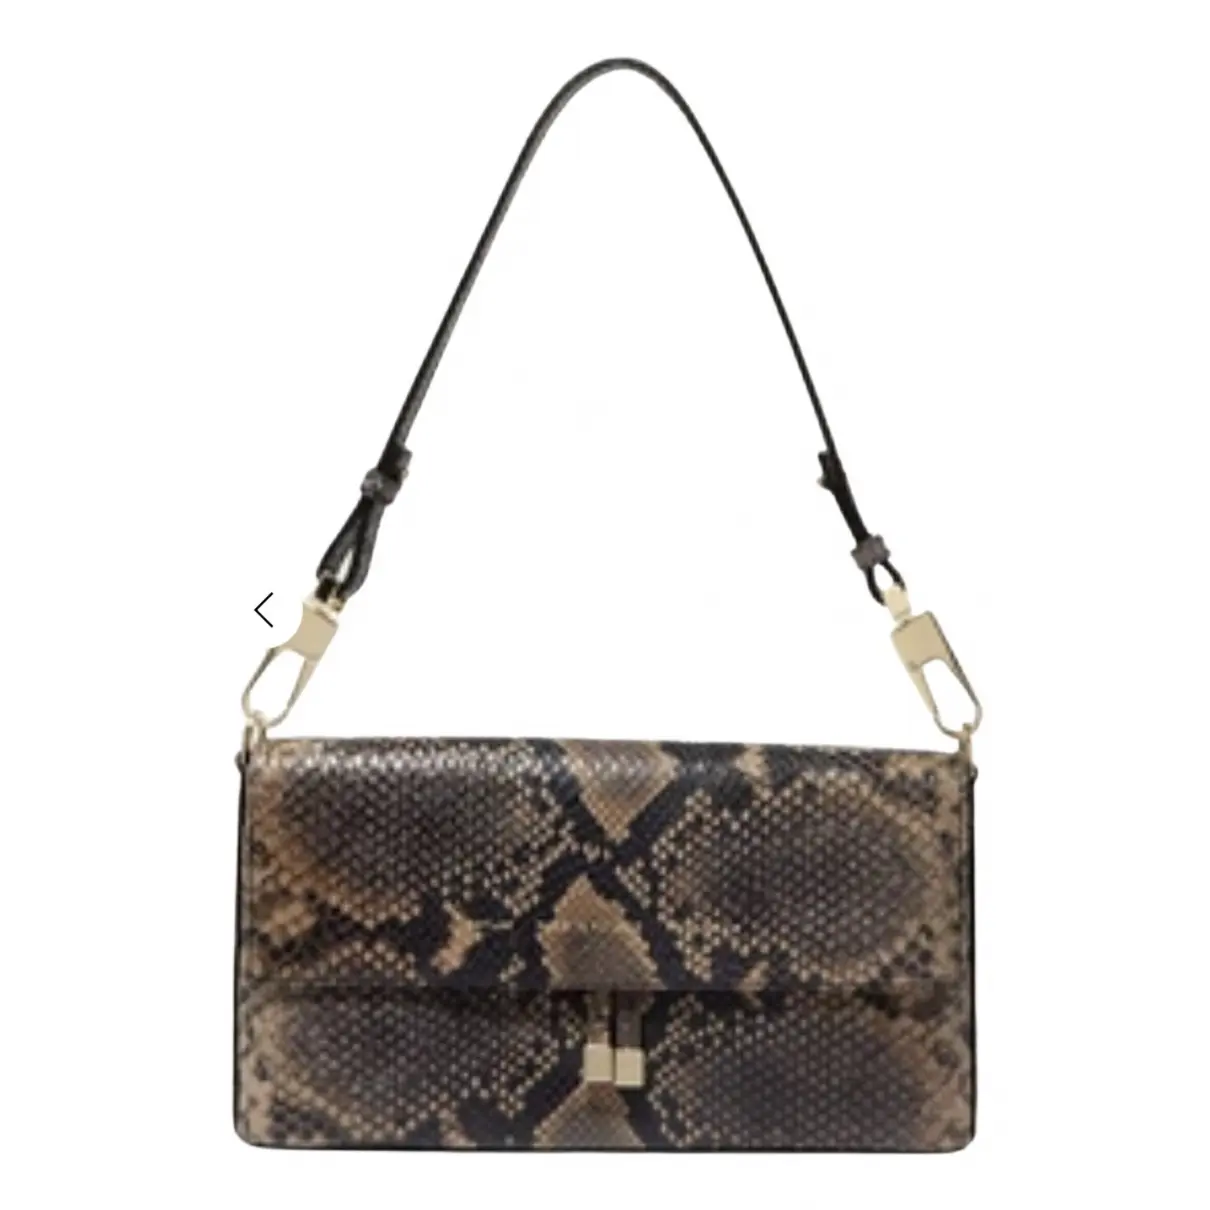 Leather handbag Chylak